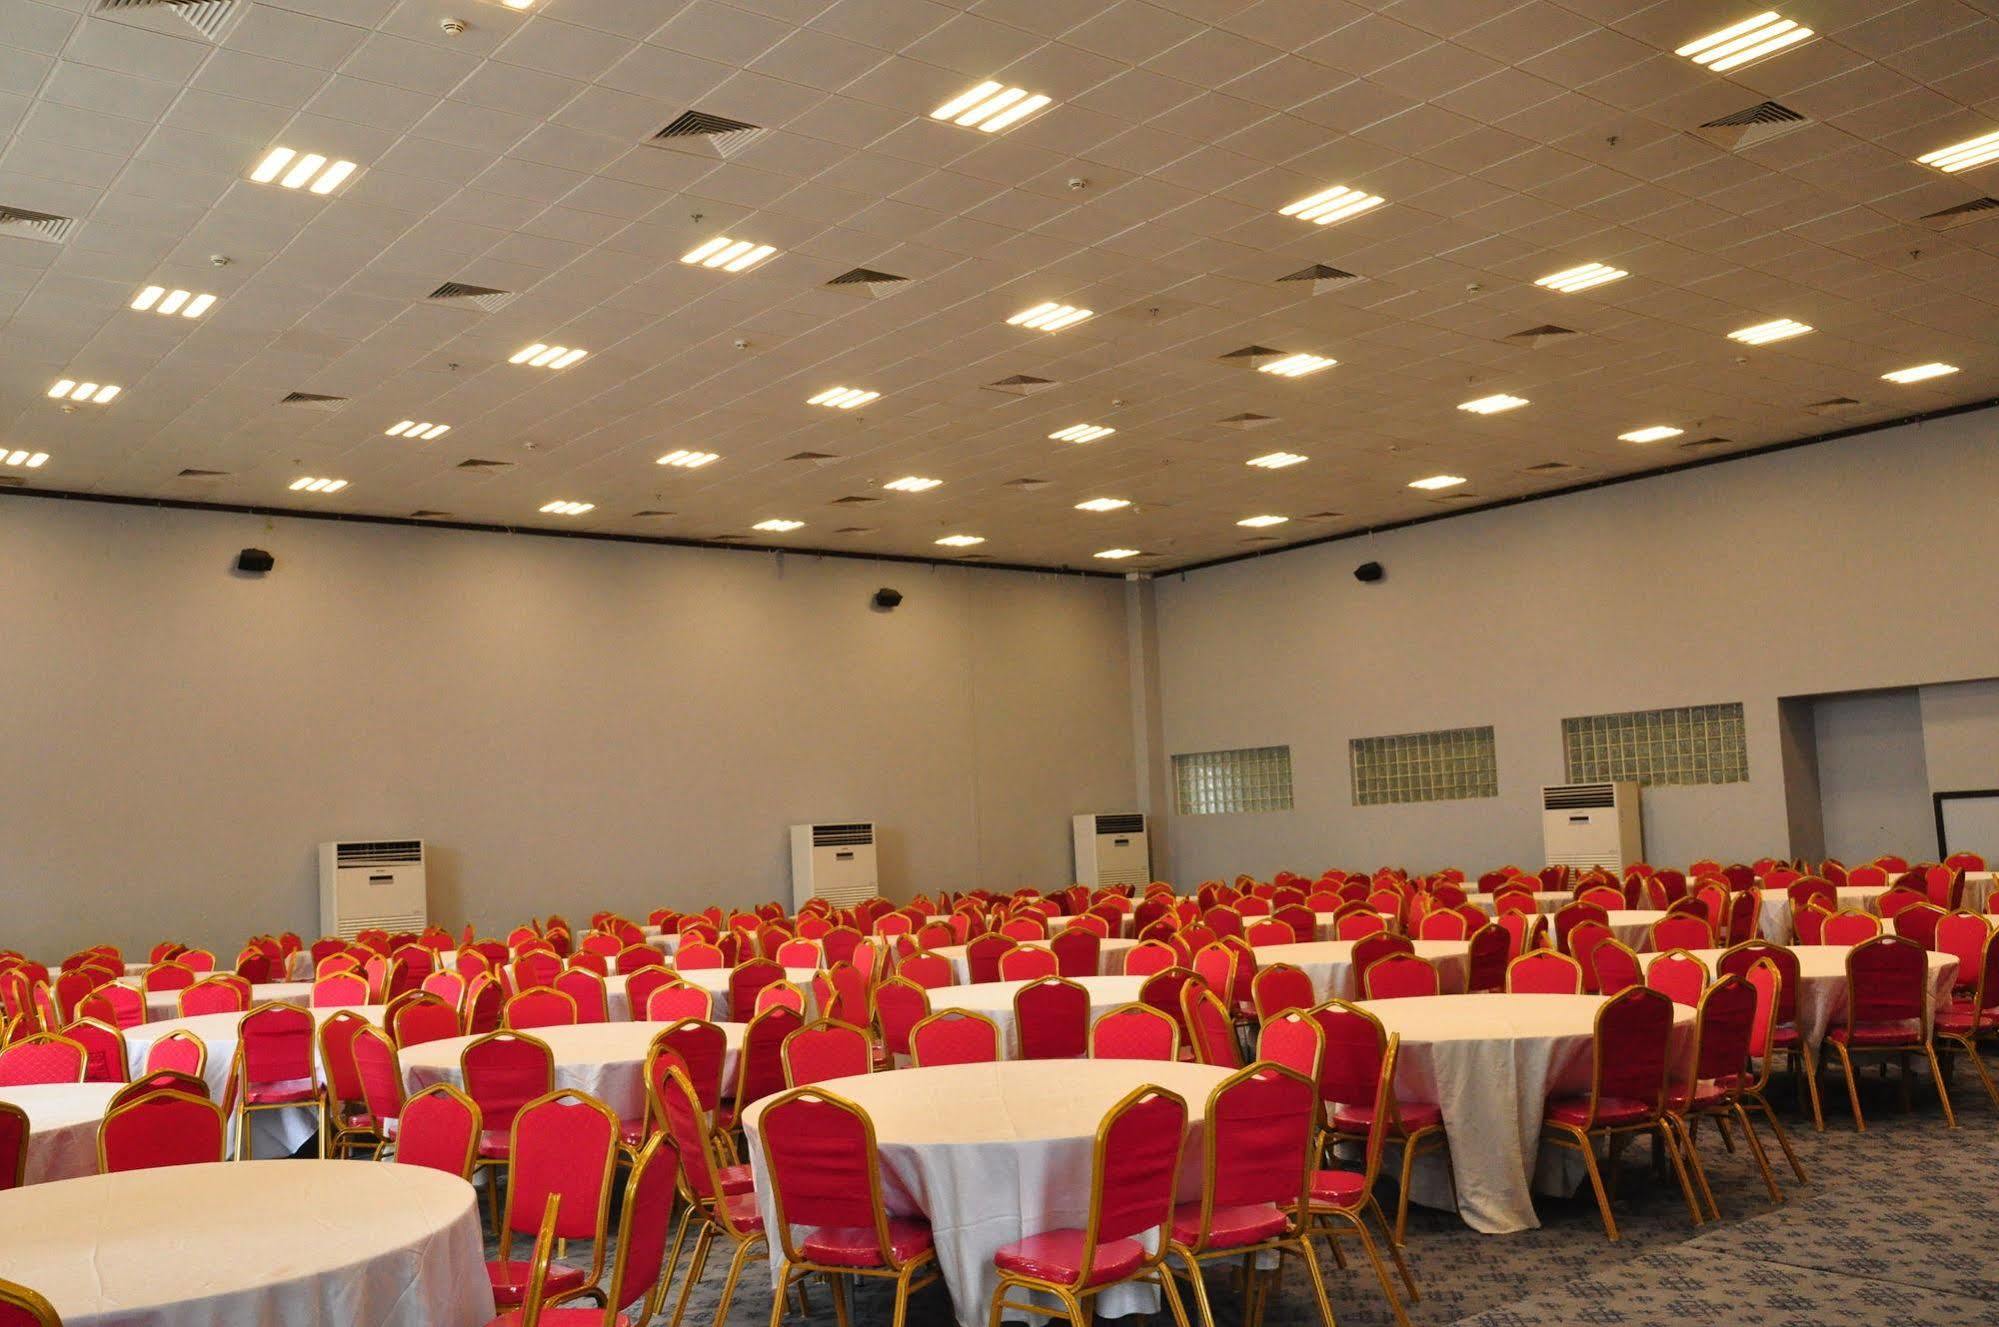 Naf Conference Centre & Suites Abuja Exterior foto